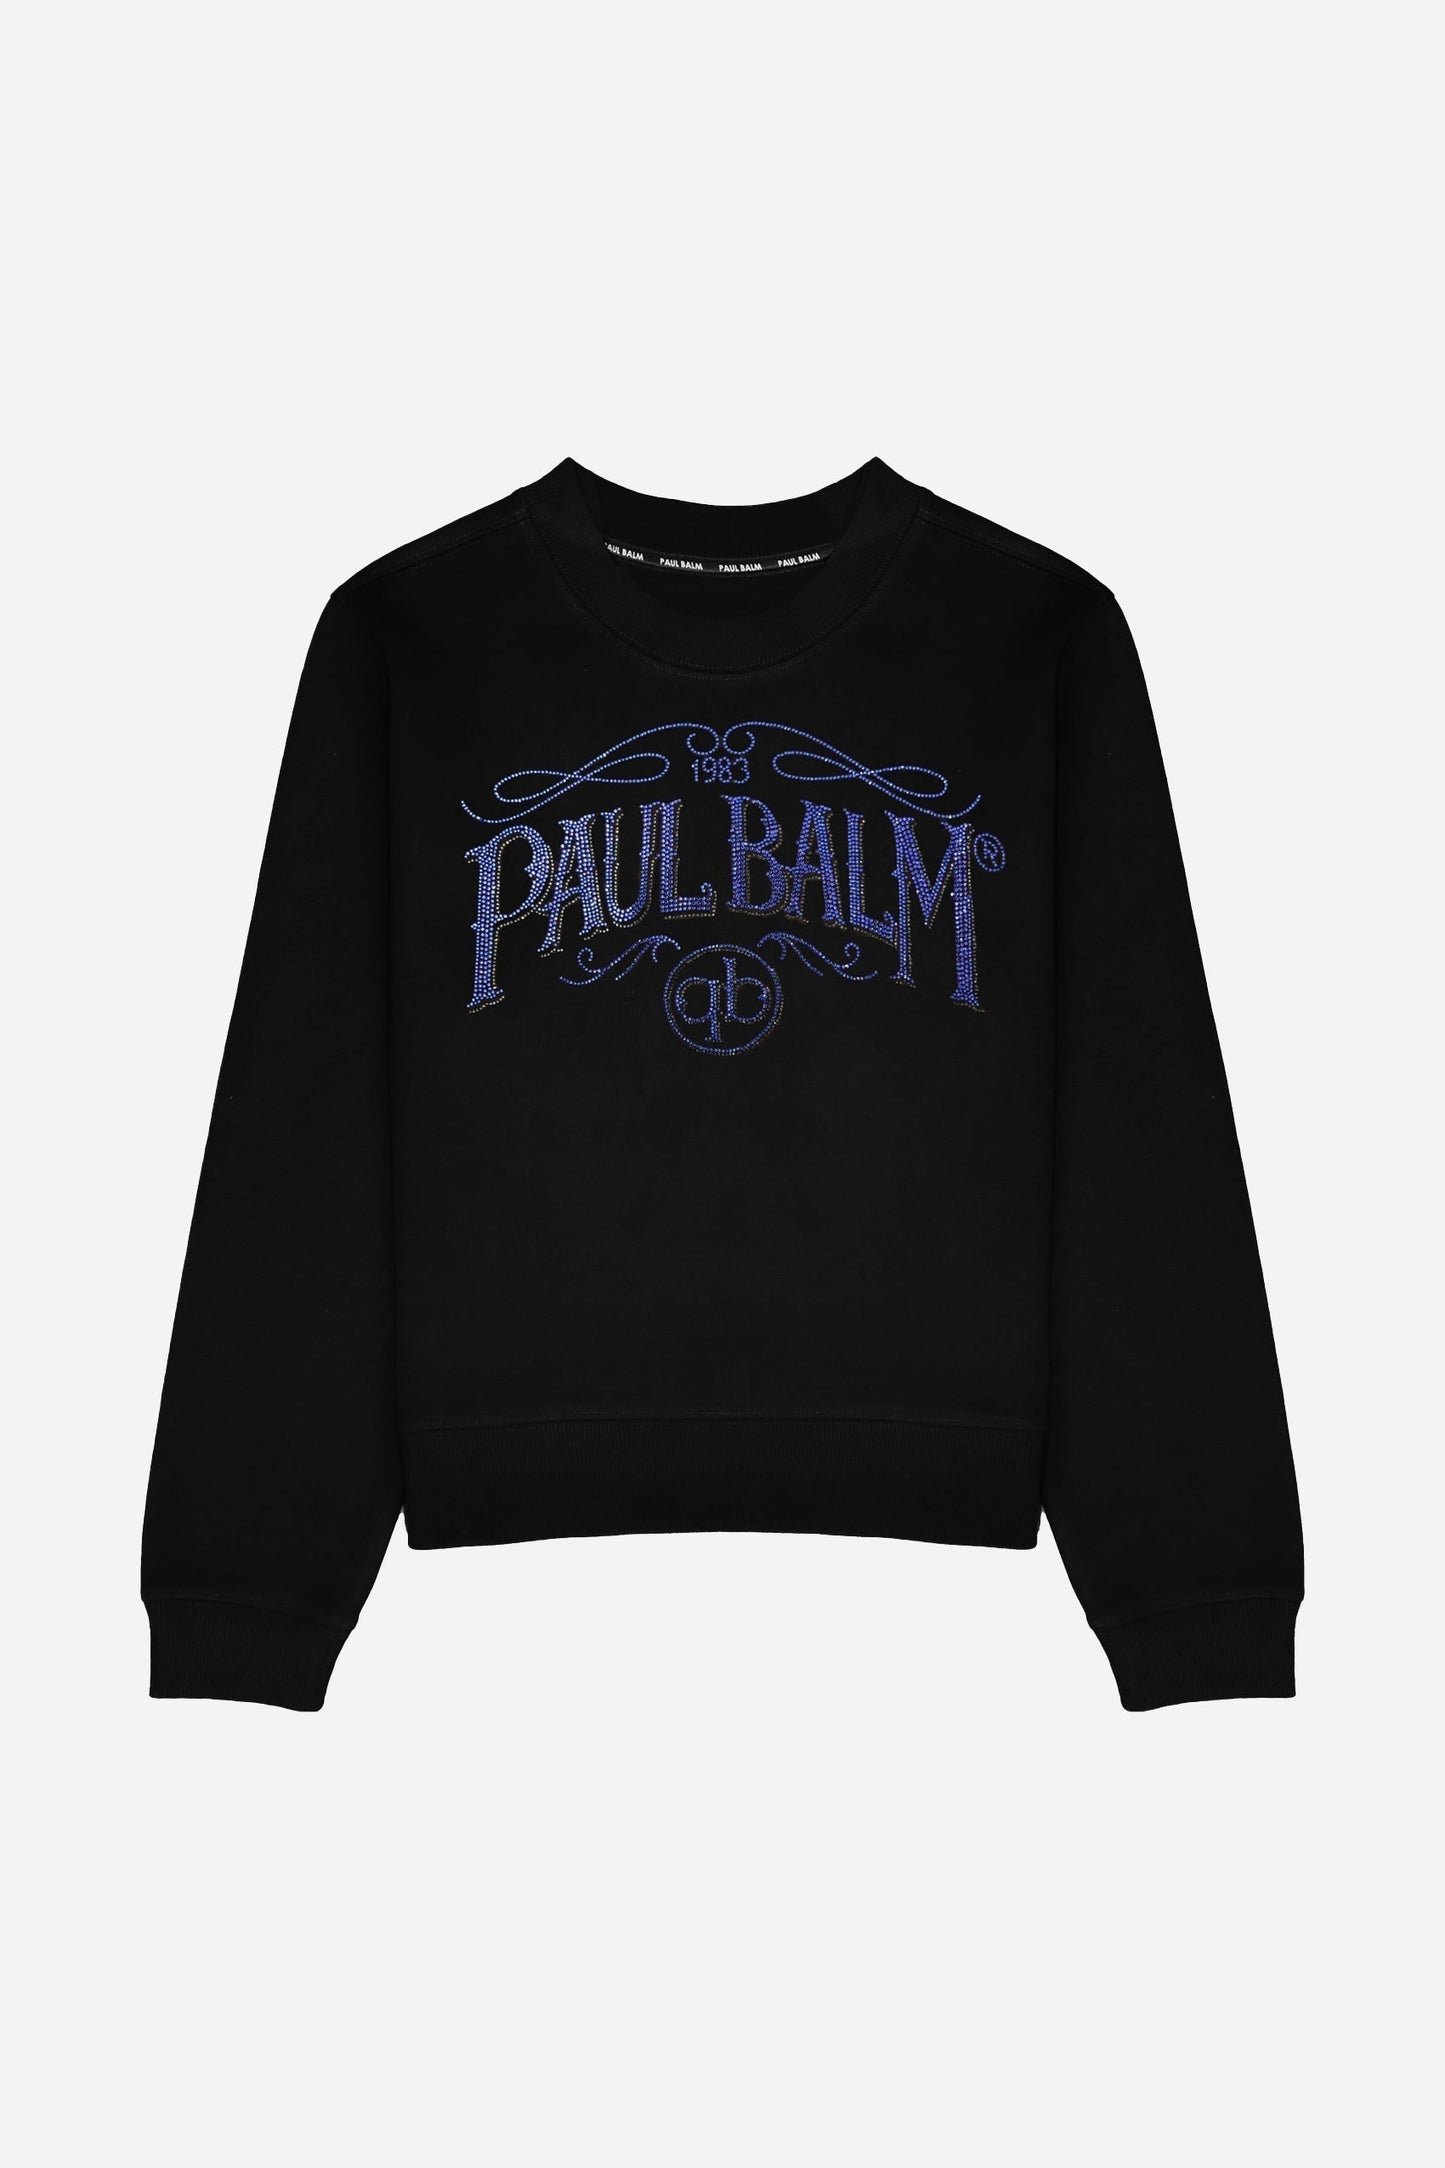 Celestic Crystals Sweatshirt - Limited to 300 - PAUL BALM WORLD